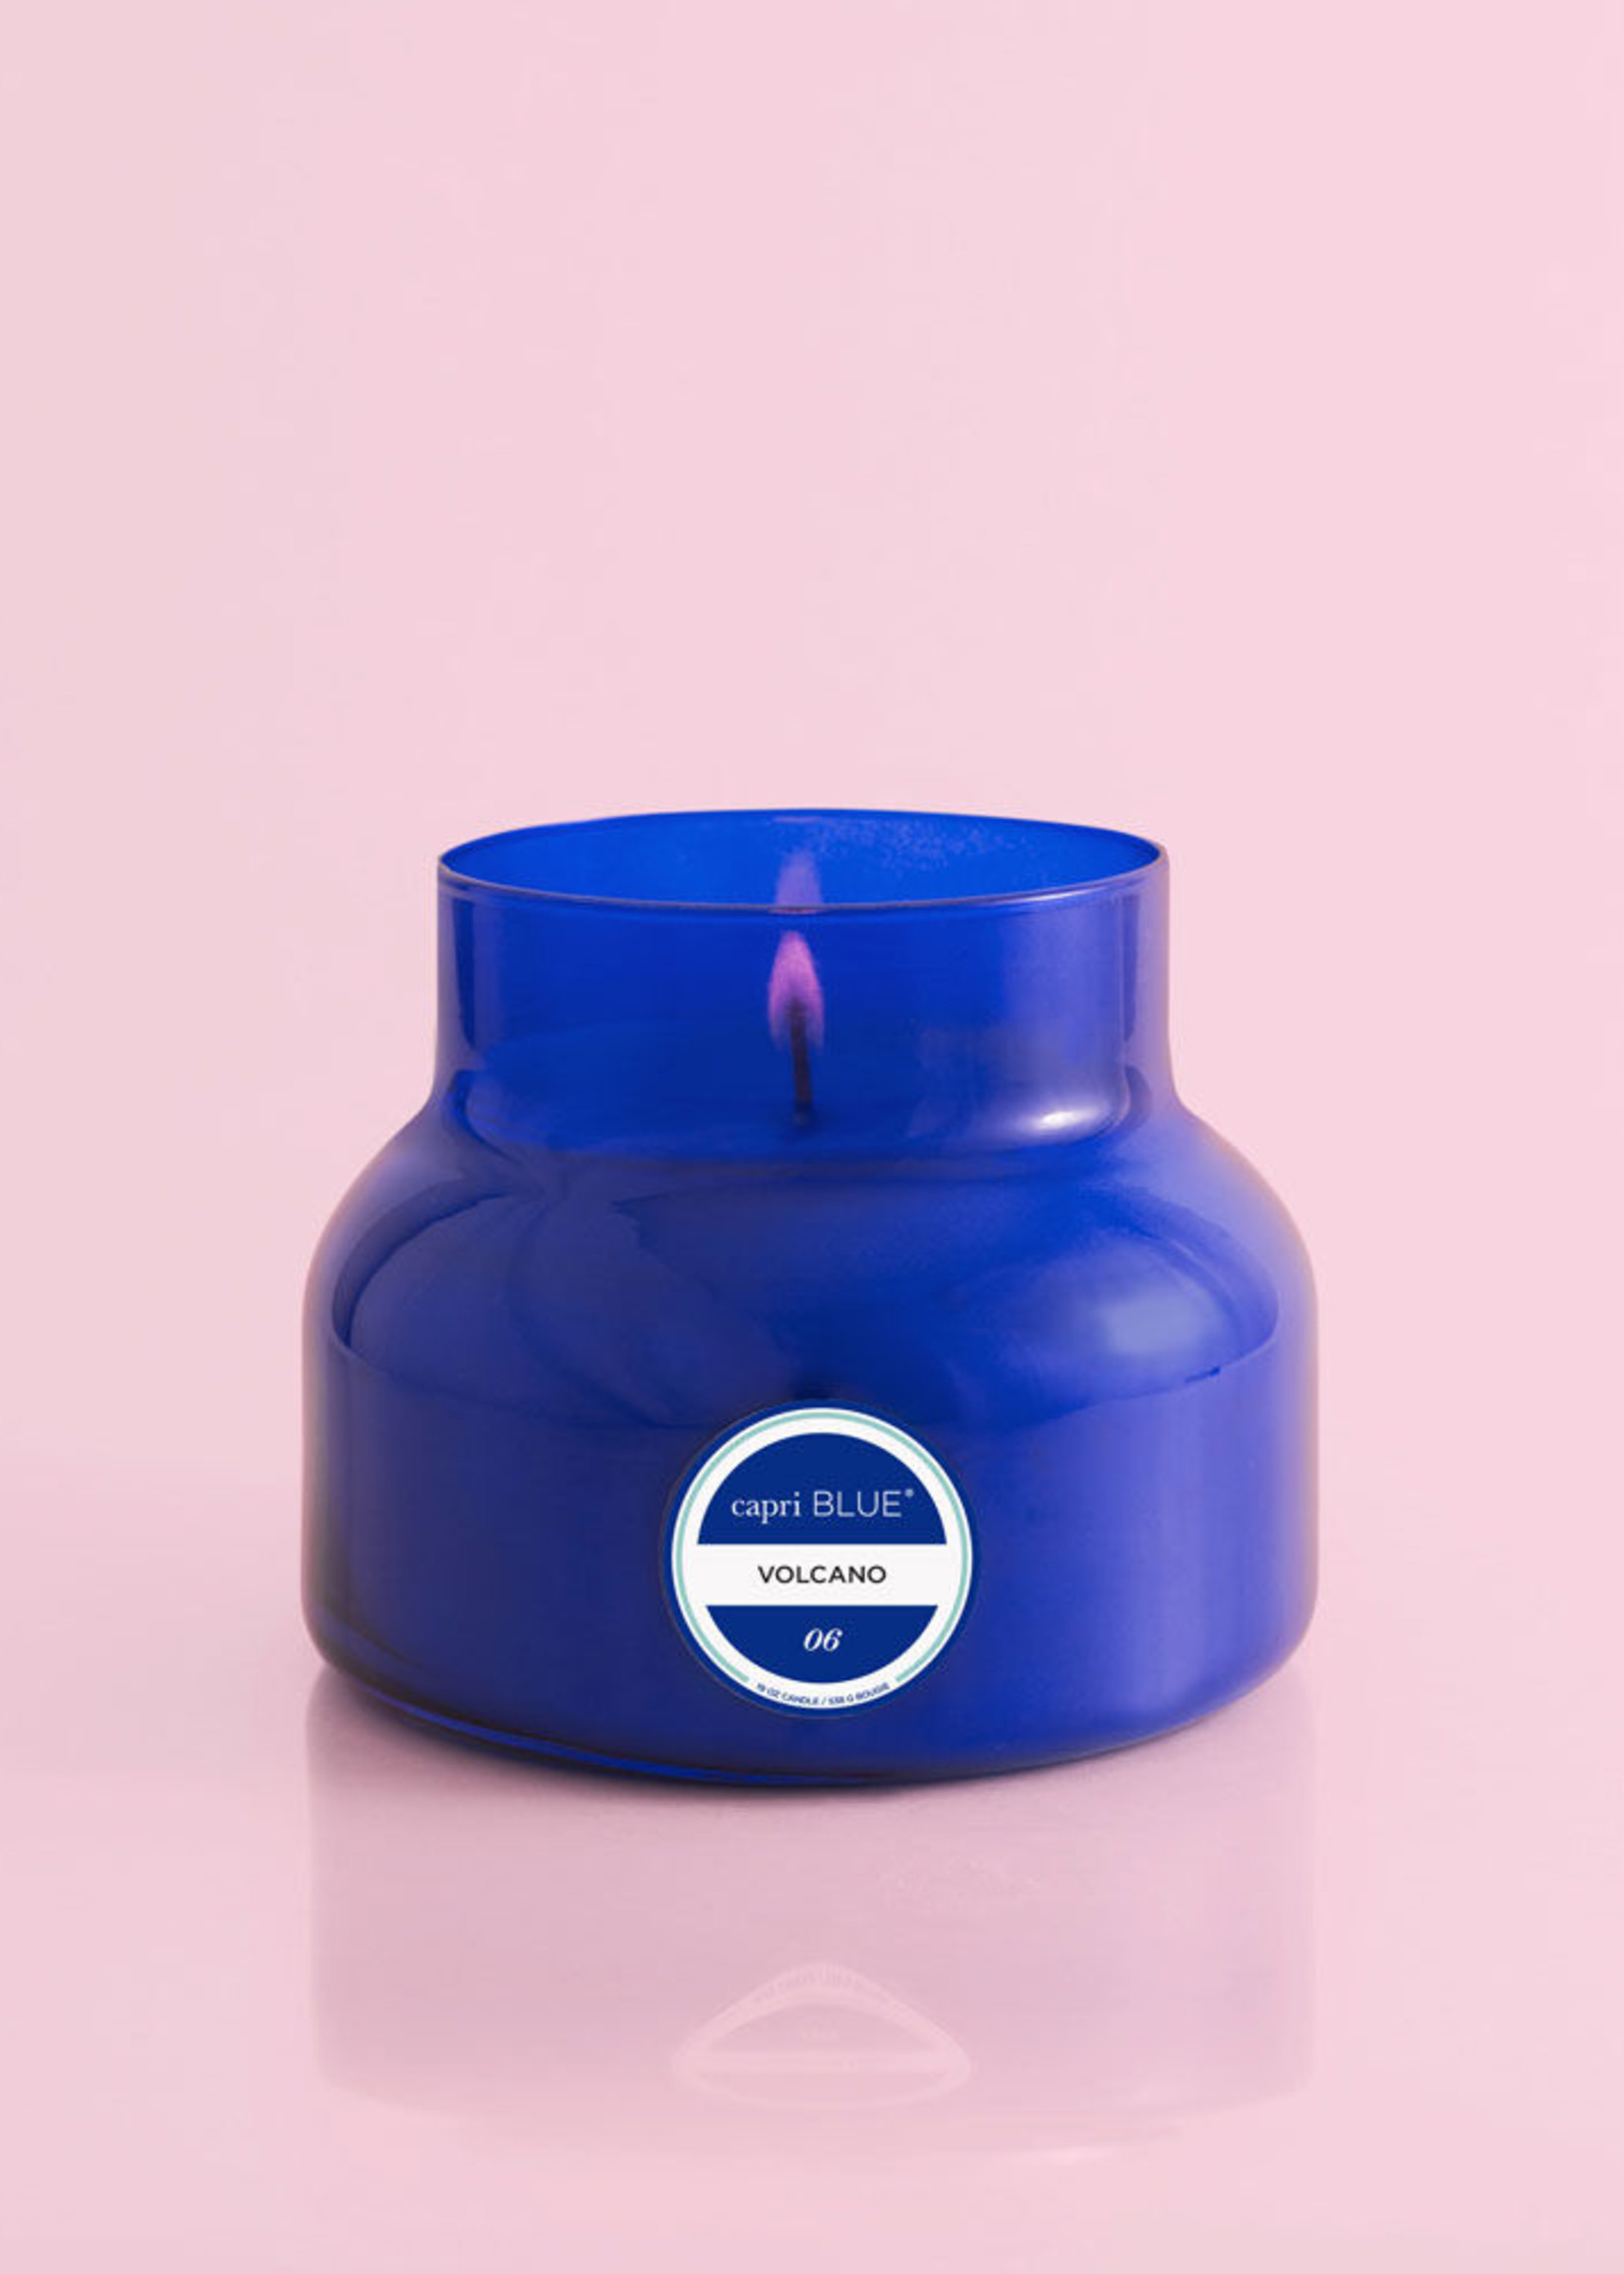 Capri Blue Volcano Signature Blue Jar Candle 19oz